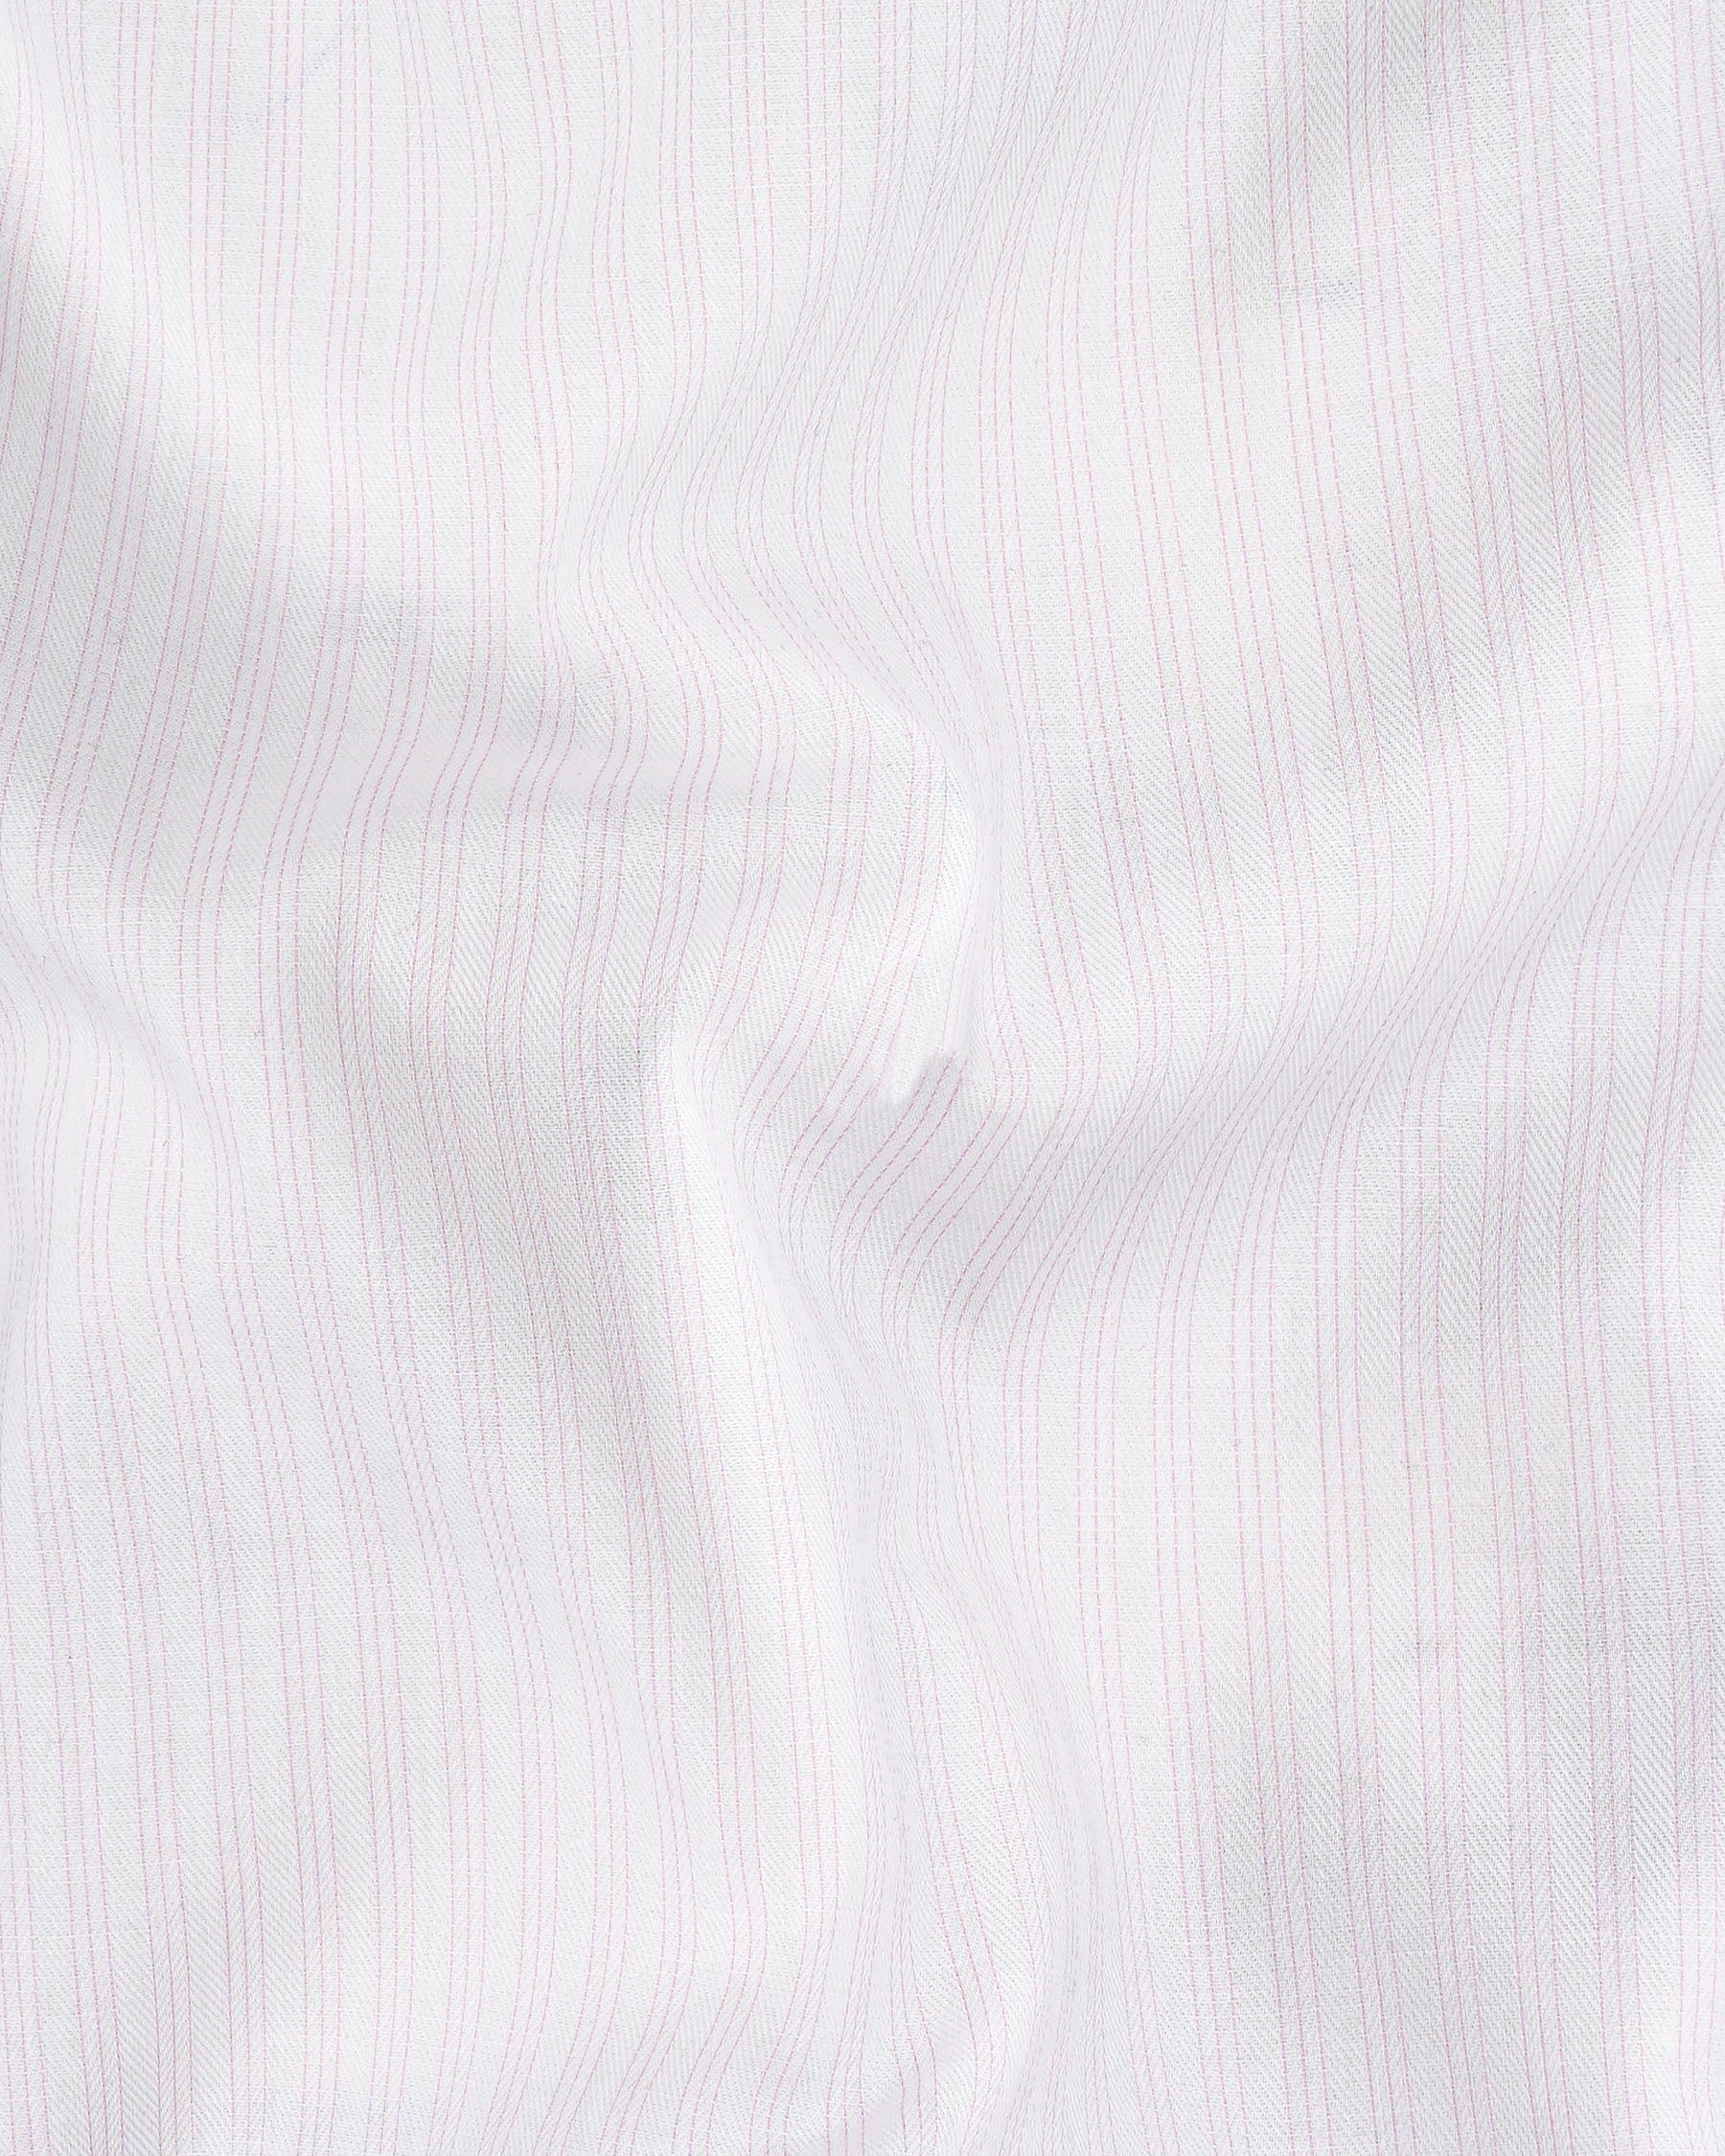 Bright White and Maverick Pink Twill Pinstriped Premium Cotton Shirt  7996-CA-38,7996-CA-H-38,7996-CA-39,7996-CA-H-39,7996-CA-40,7996-CA-H-40,7996-CA-42,7996-CA-H-42,7996-CA-44,7996-CA-H-44,7996-CA-46,7996-CA-H-46,7996-CA-48,7996-CA-H-48,7996-CA-50,7996-CA-H-50,7996-CA-52,7996-CA-H-52